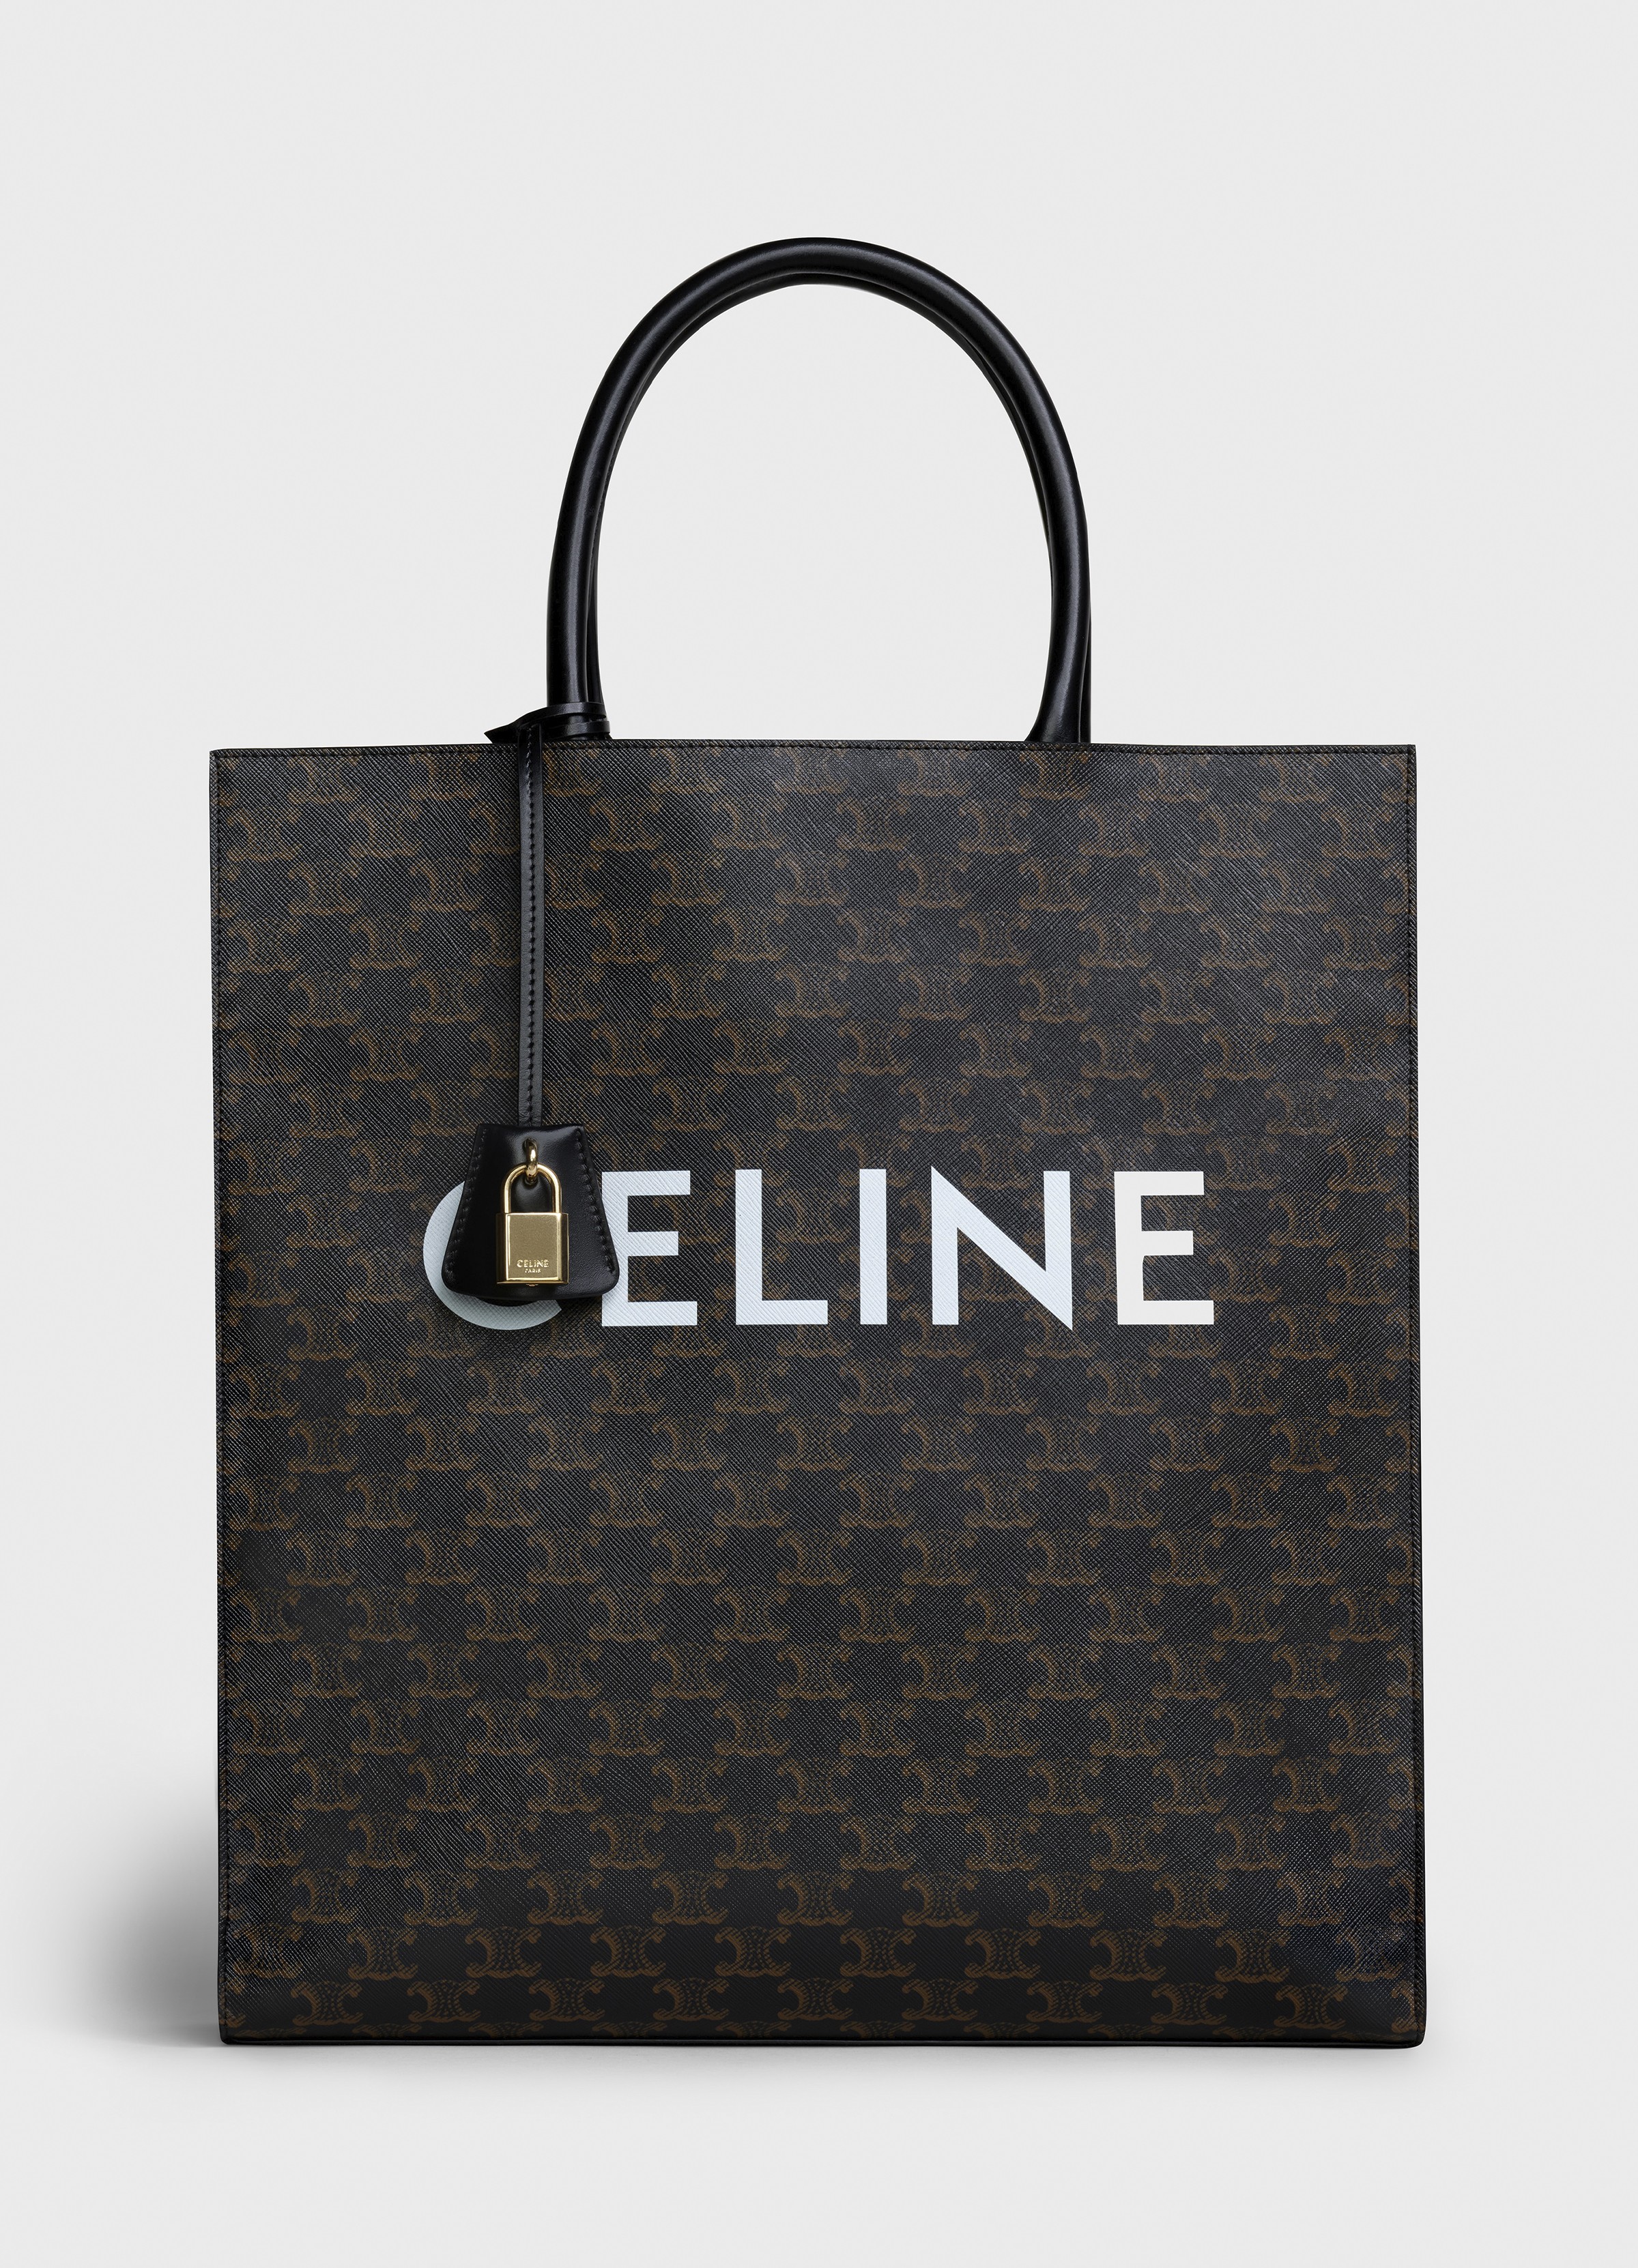 celine new bags 2019